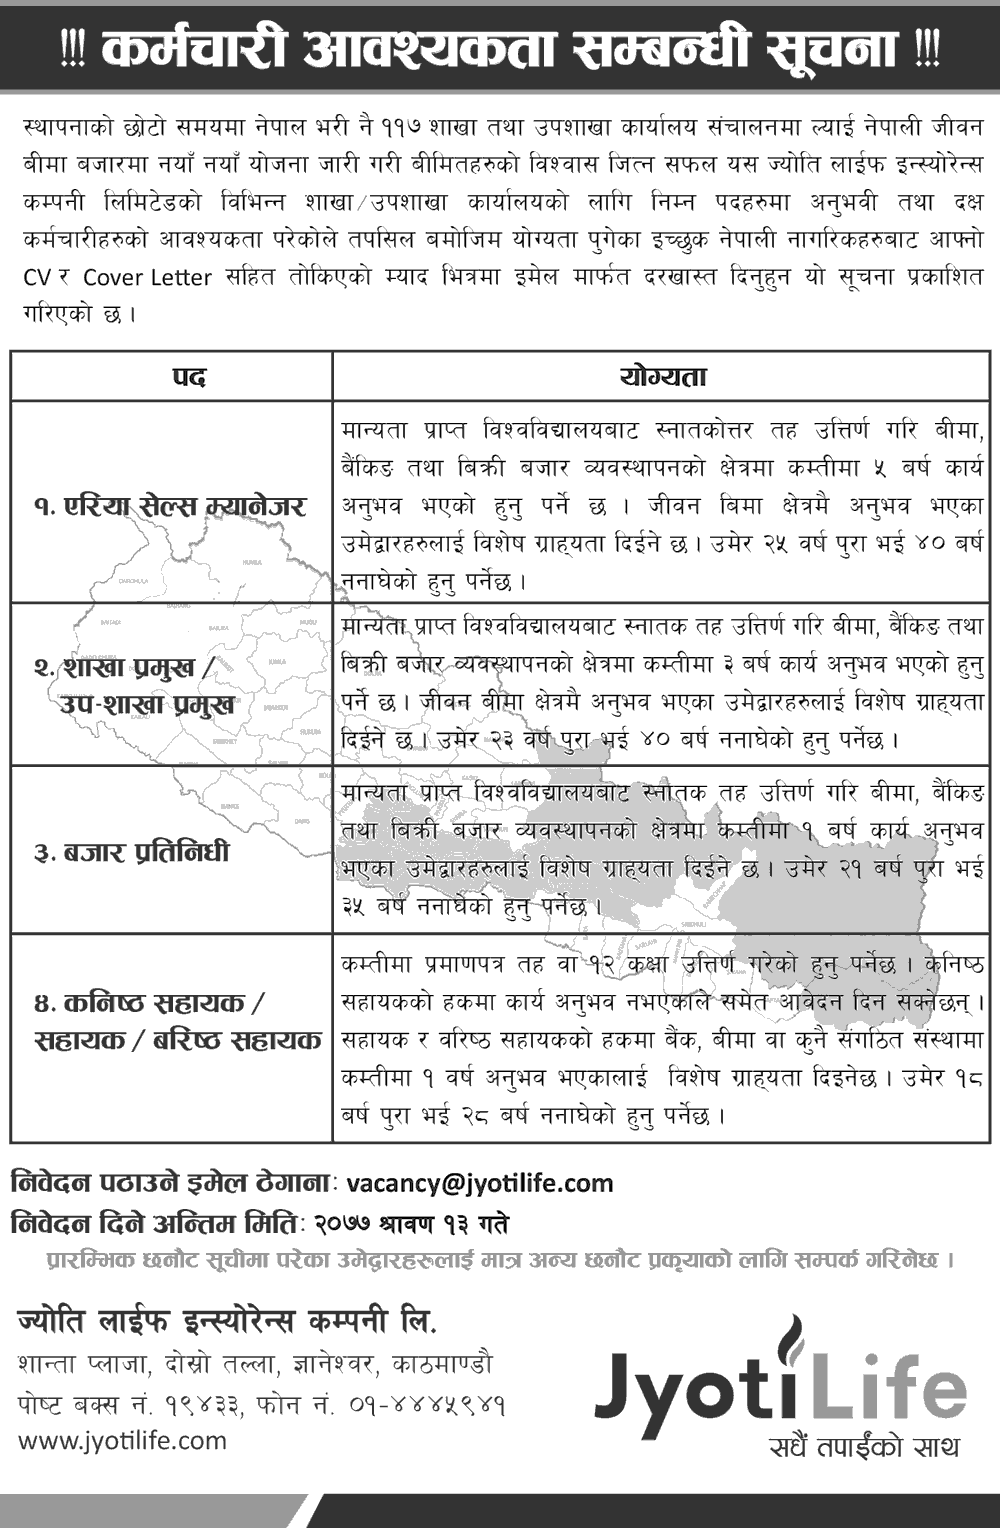 Jyoti Life Insurance Vacancy for Various Posts